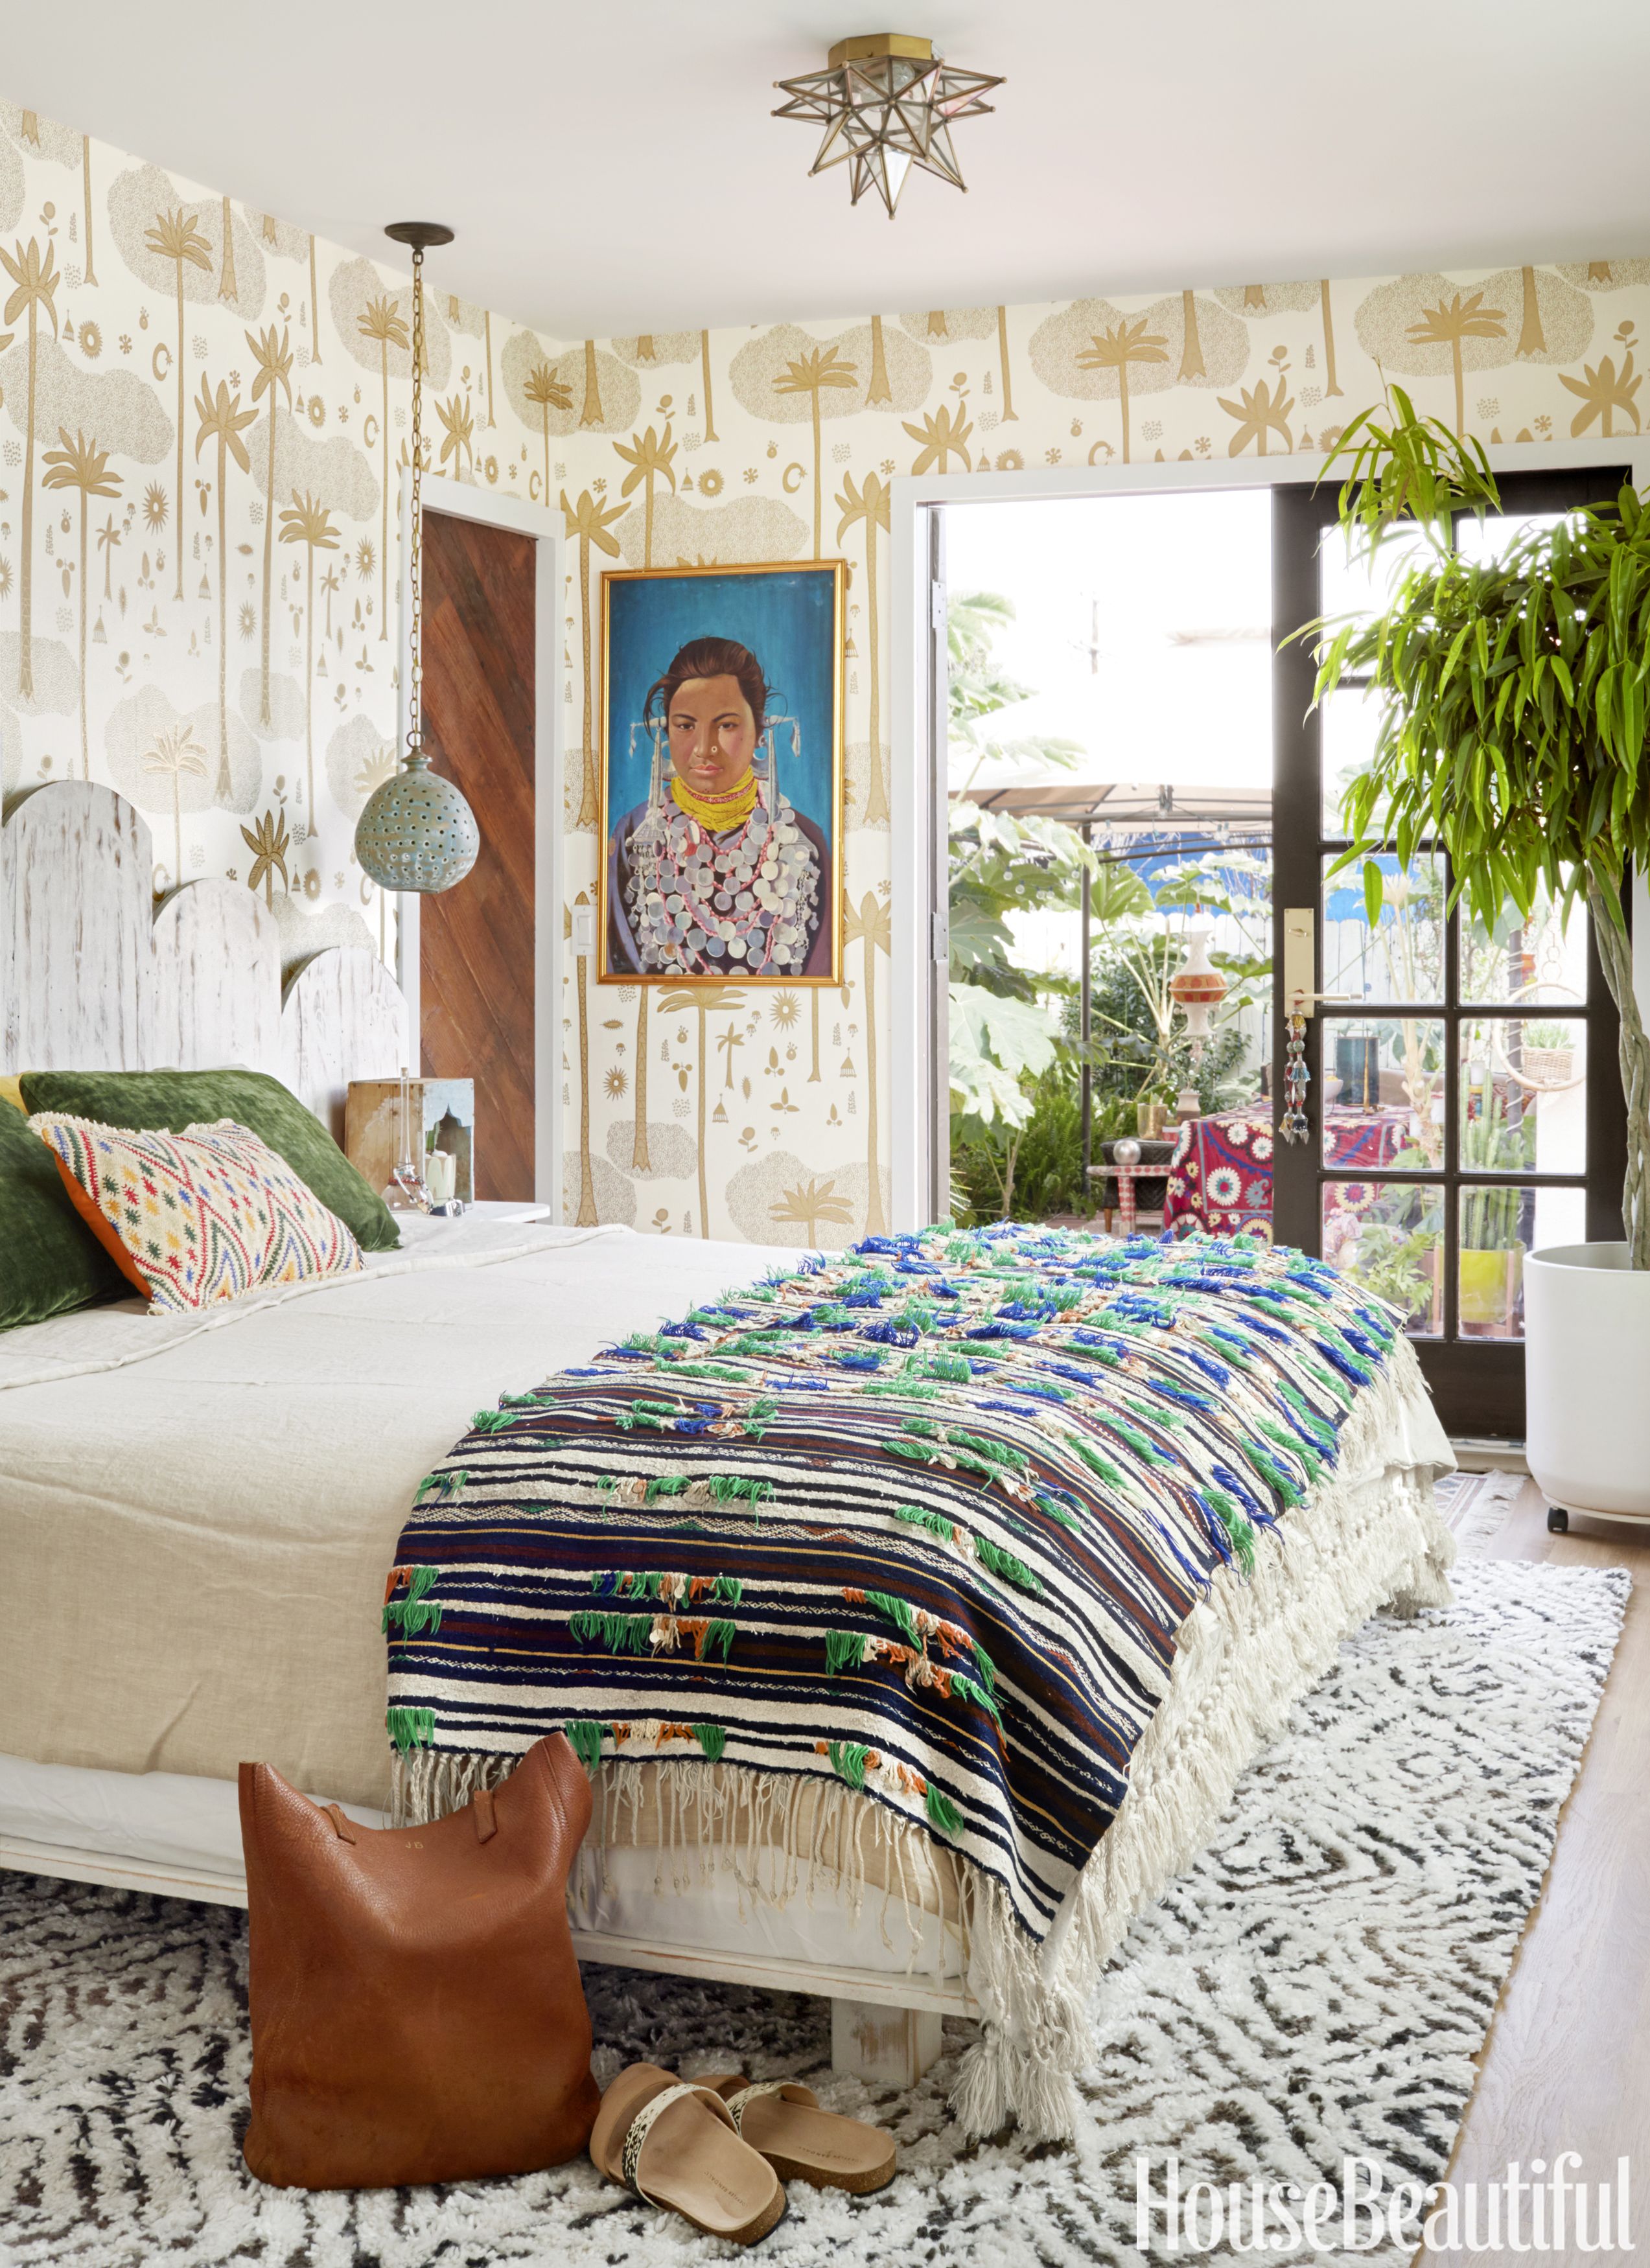 Enfriarse Cayo Histérico 30 Bohemian Decor Ideas - Boho Room Style Decorating and Inspiration